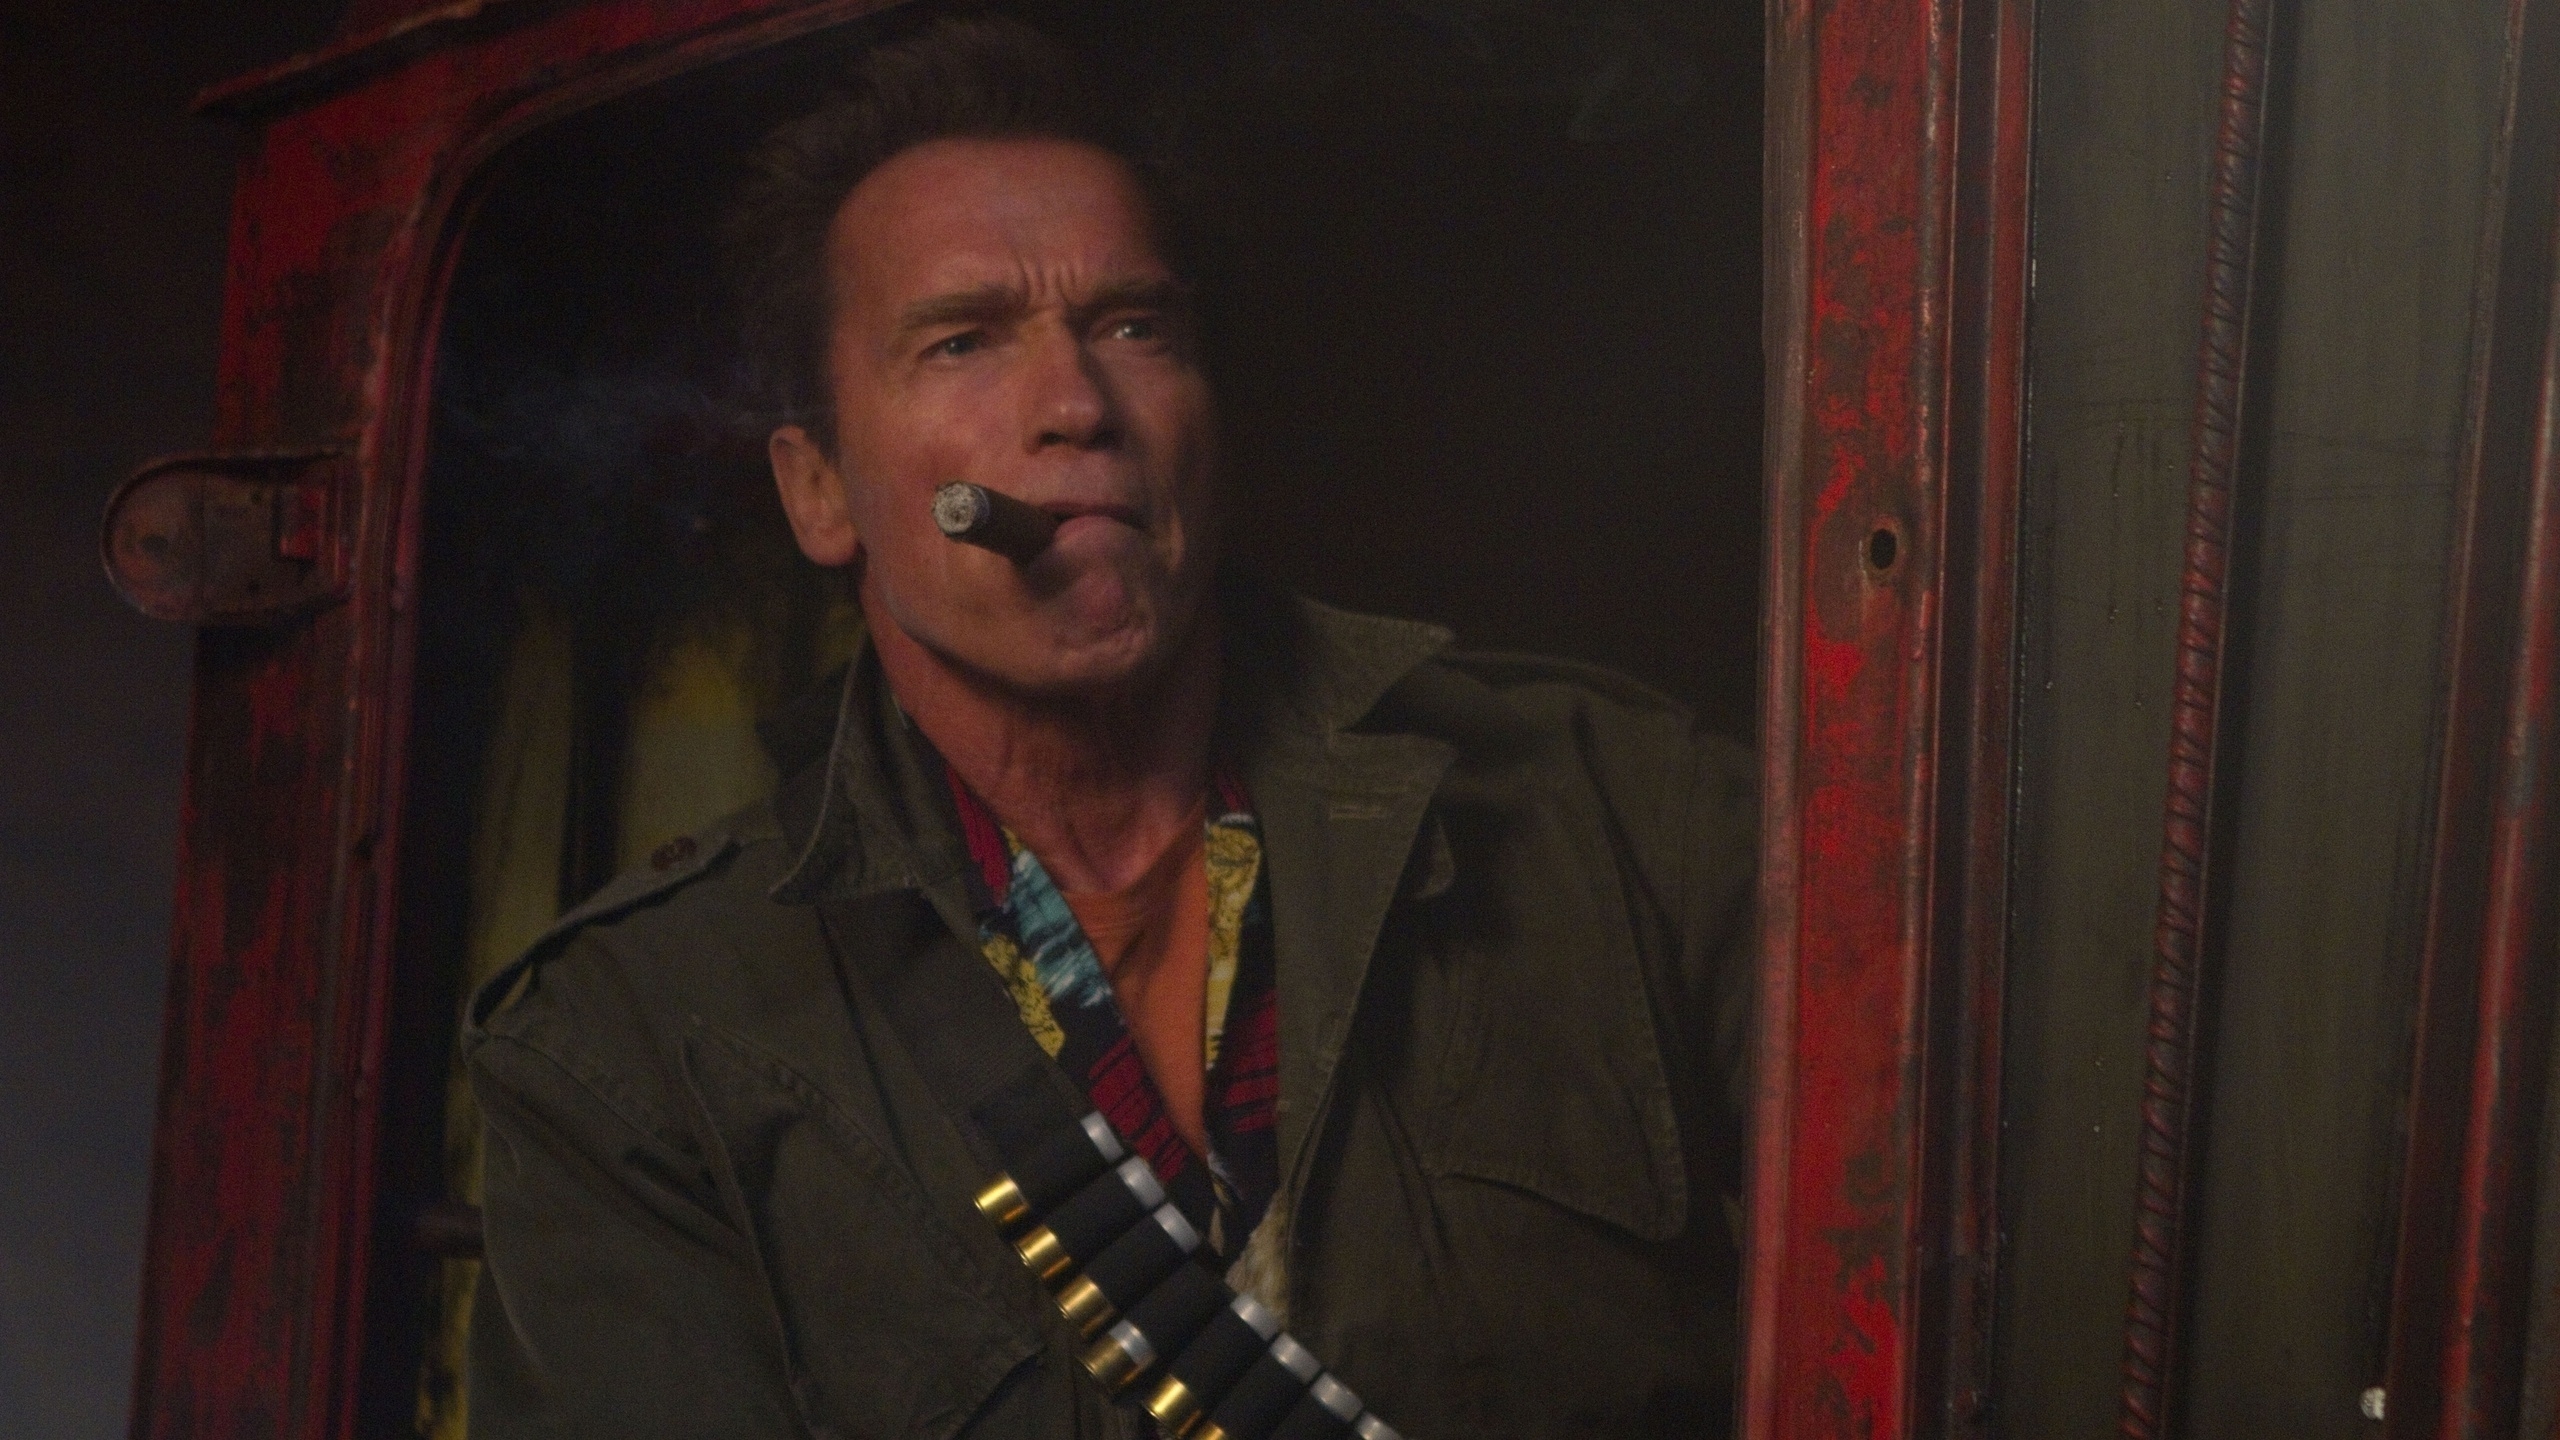 Arnold Schwarzenegger Cigar for 2560x1440 HDTV resolution